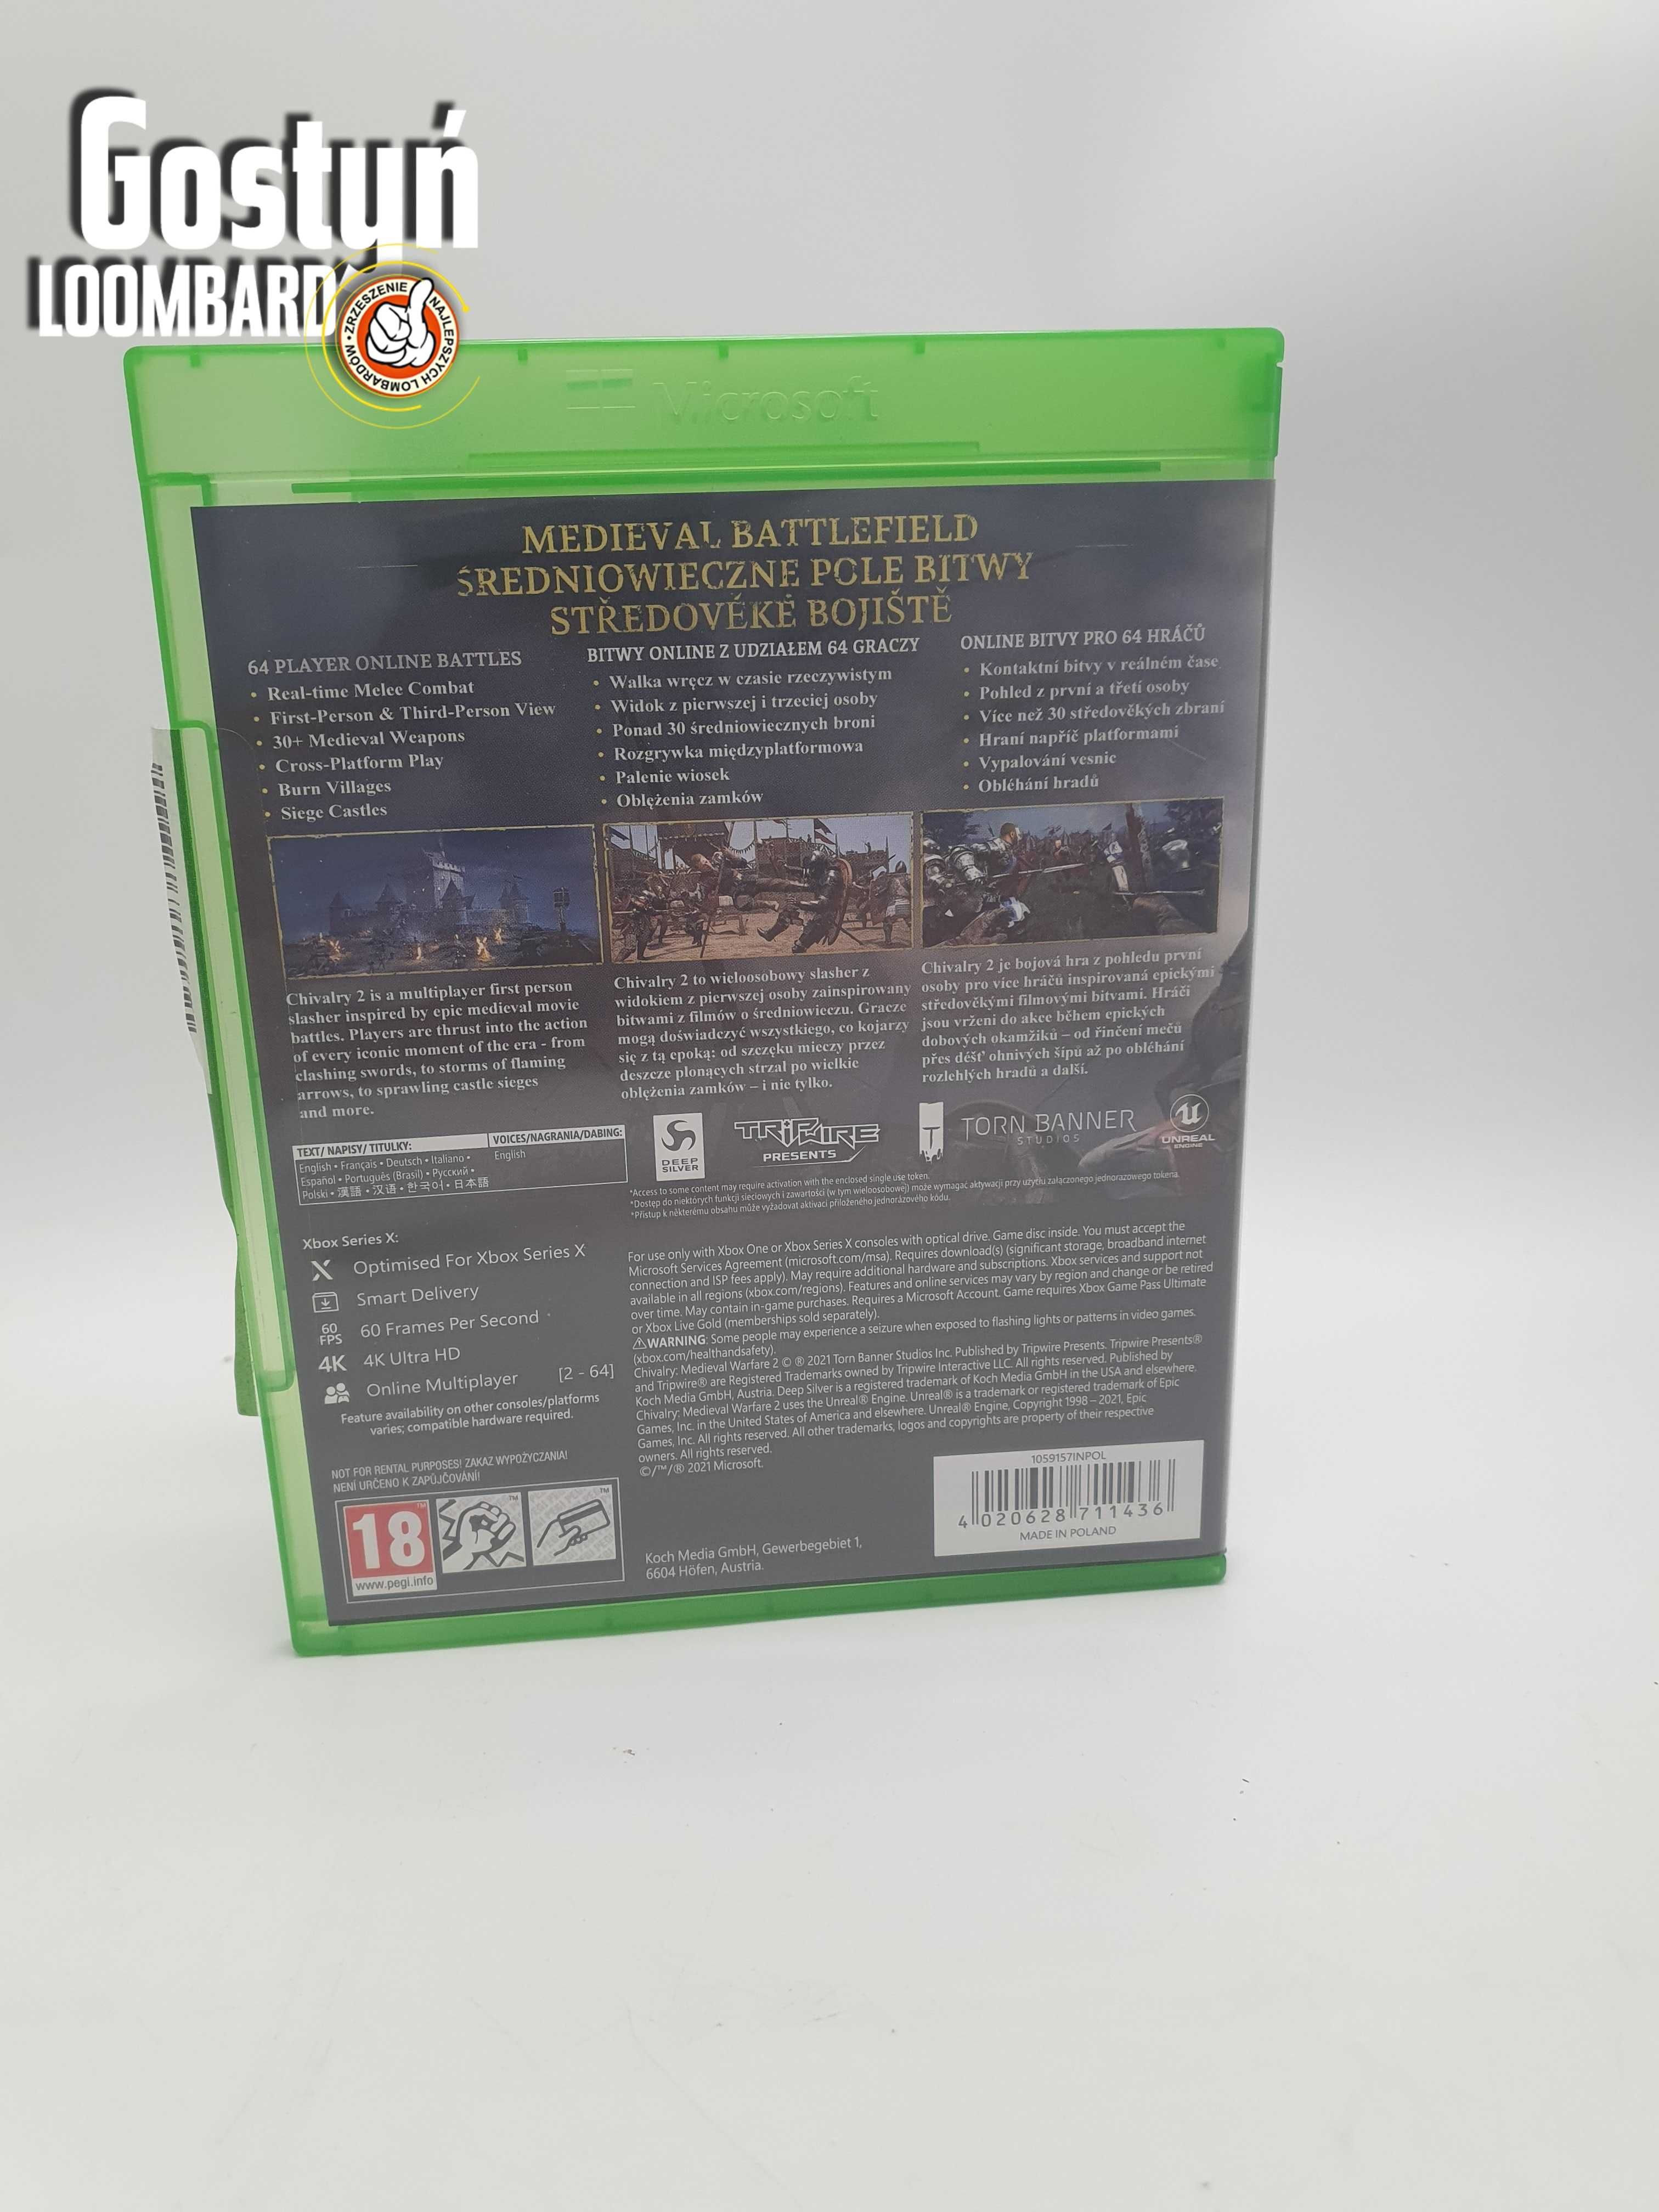 Od Loombard Gostyń Gra Chivalry 2 Xbox Series X